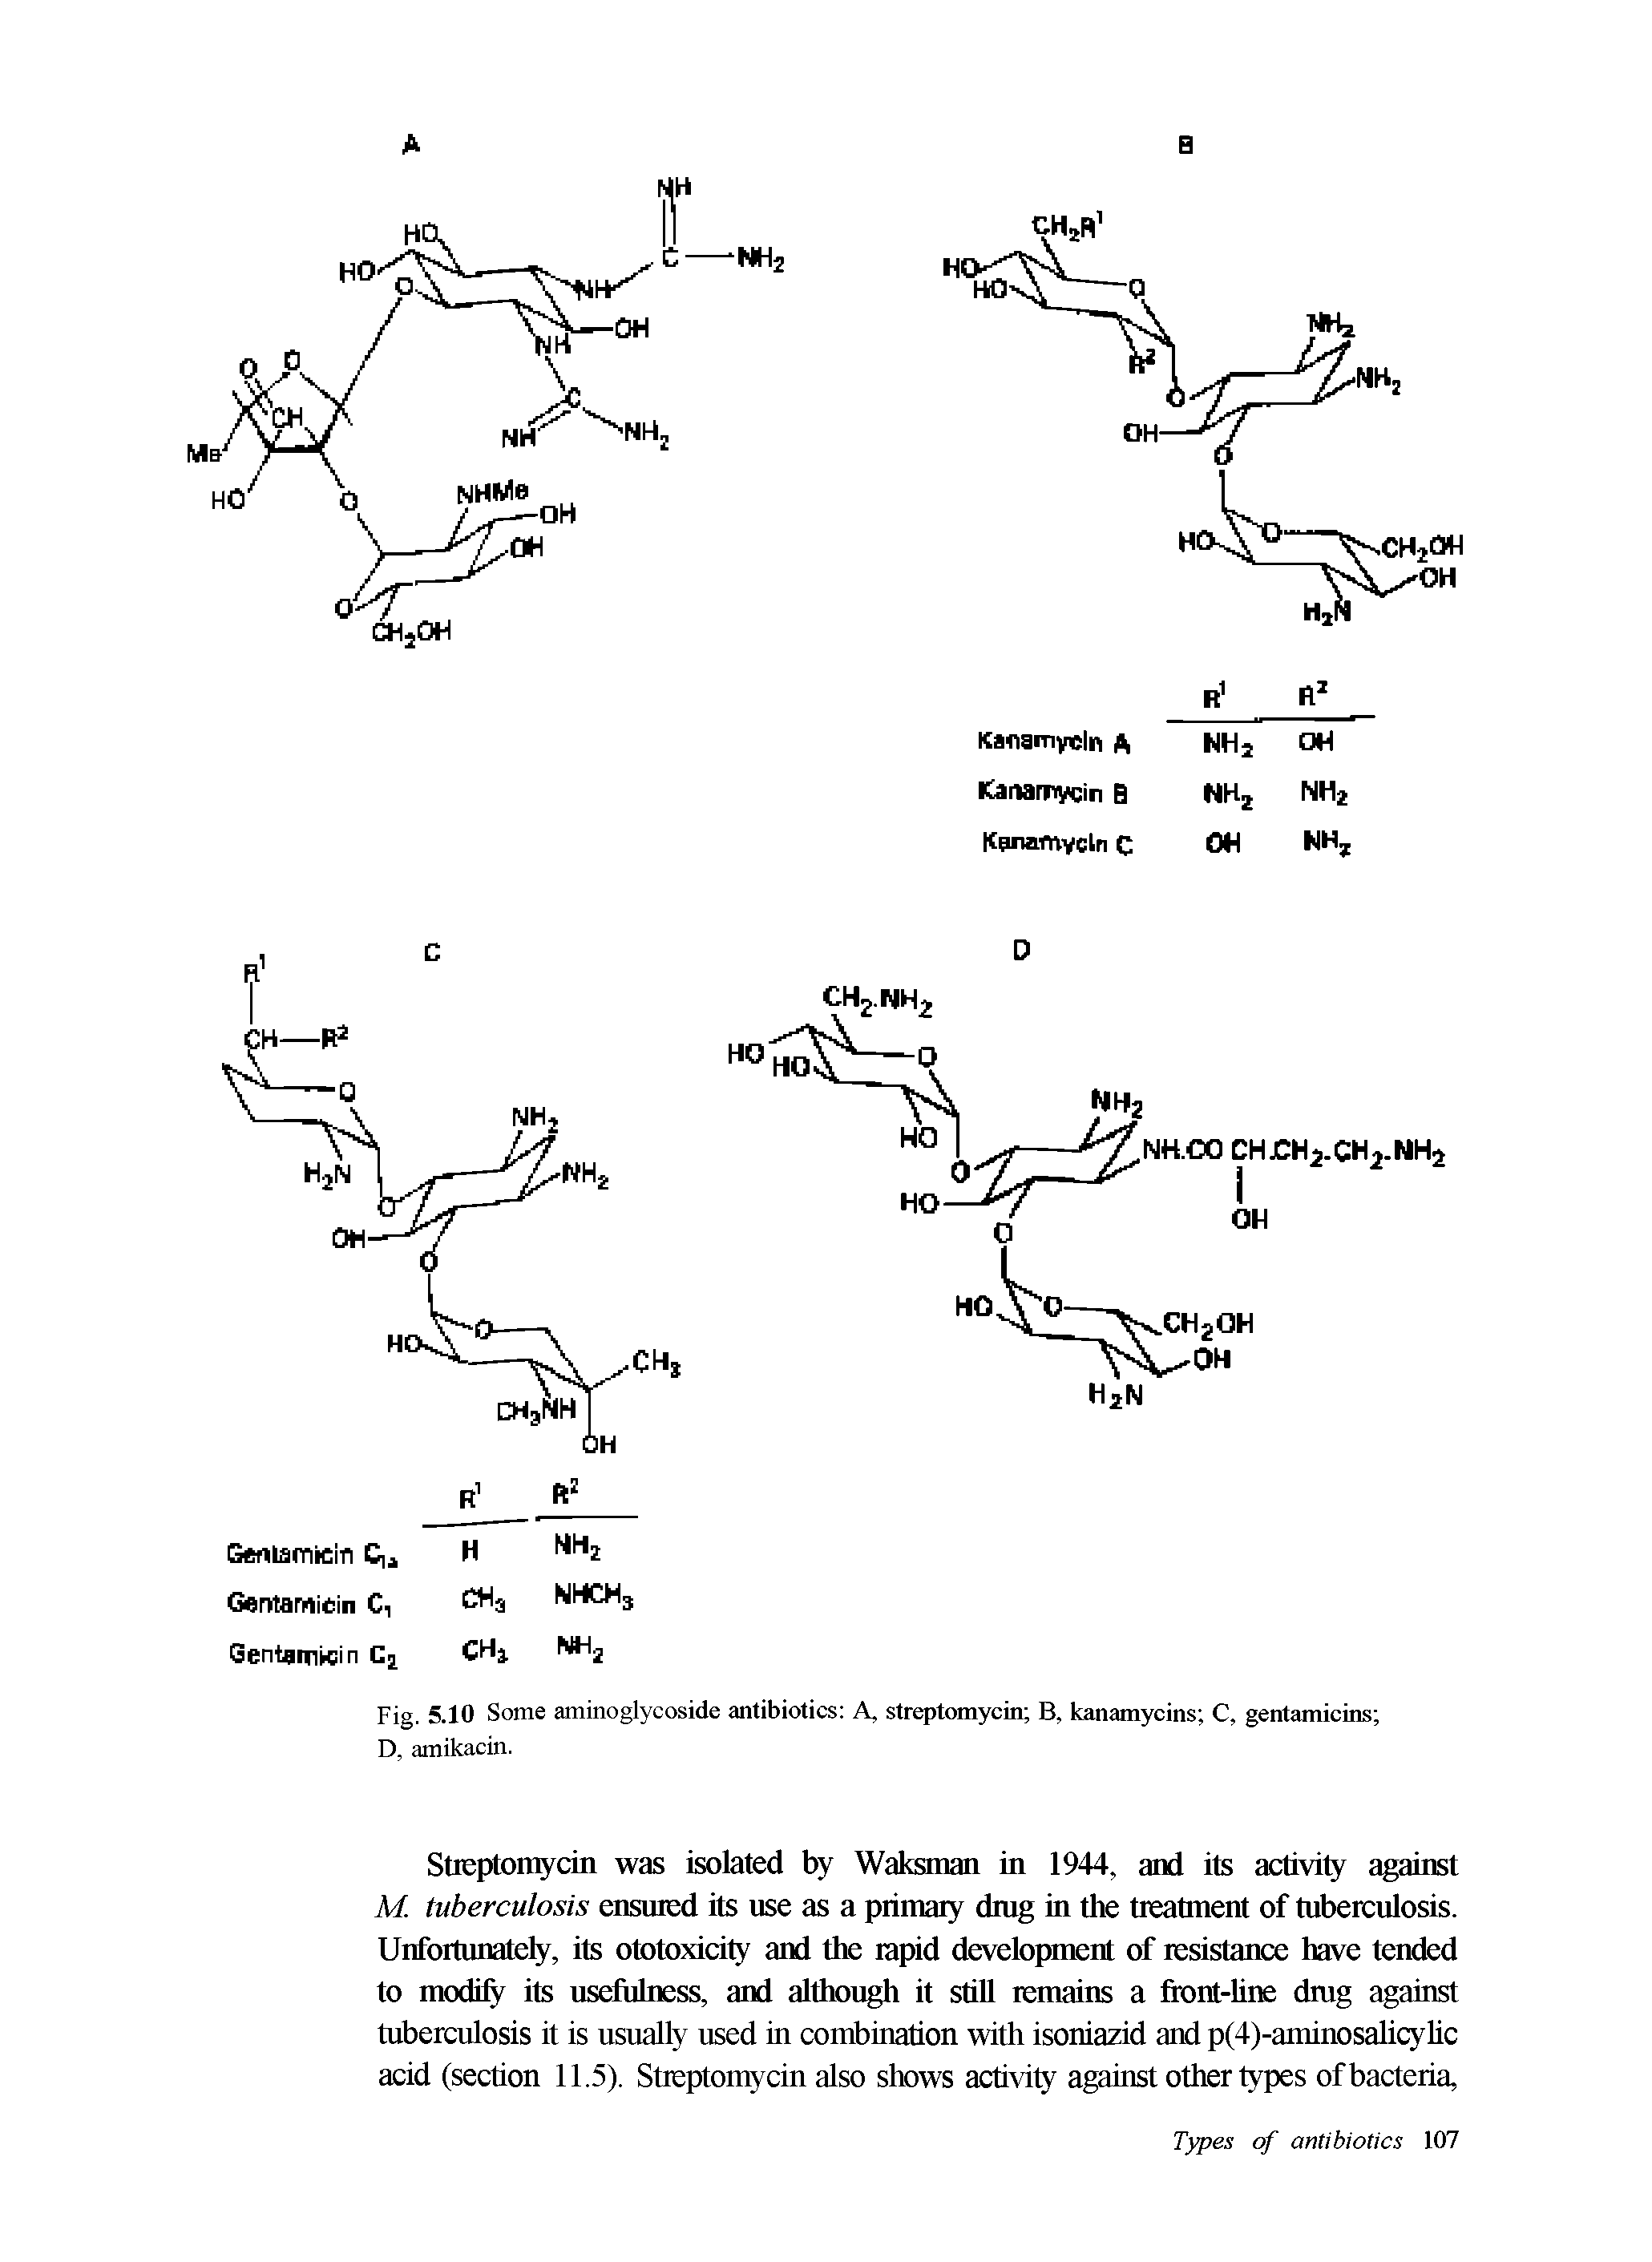 Fig. 5.10 Some aminoglycoside antibiotics A, streptomycin B, kanamycins C, gentamicins D, amikacin.